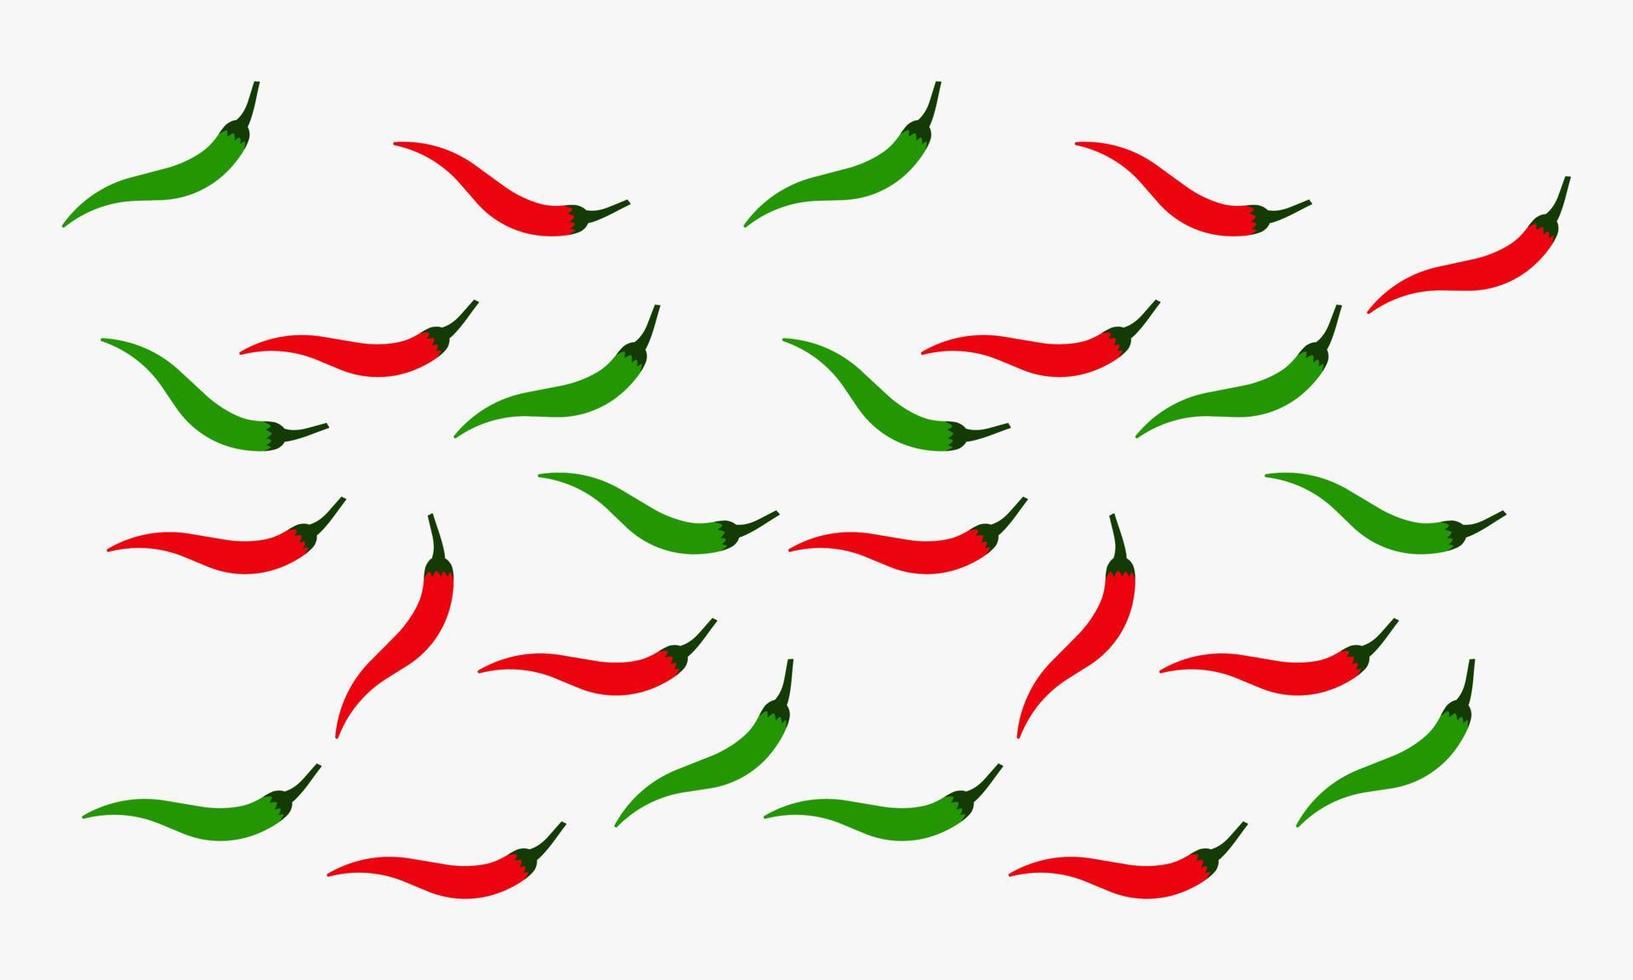 pattern chili cayenne vector design background.